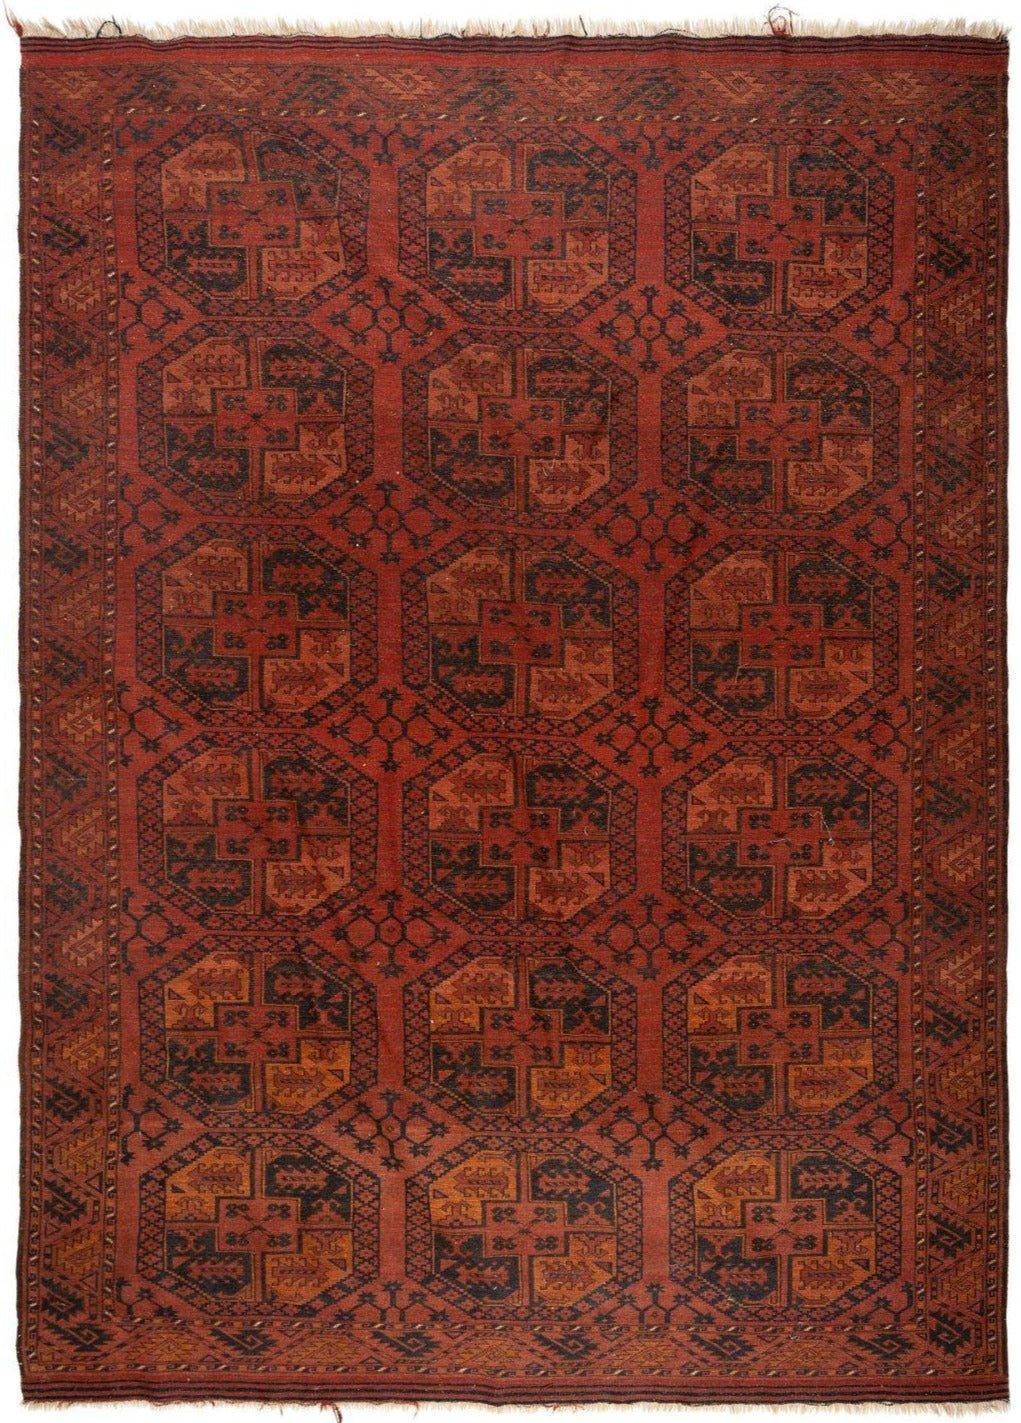 Antique Distressed Bokhara Oriental Area Rug 10'2'' x 7'3''